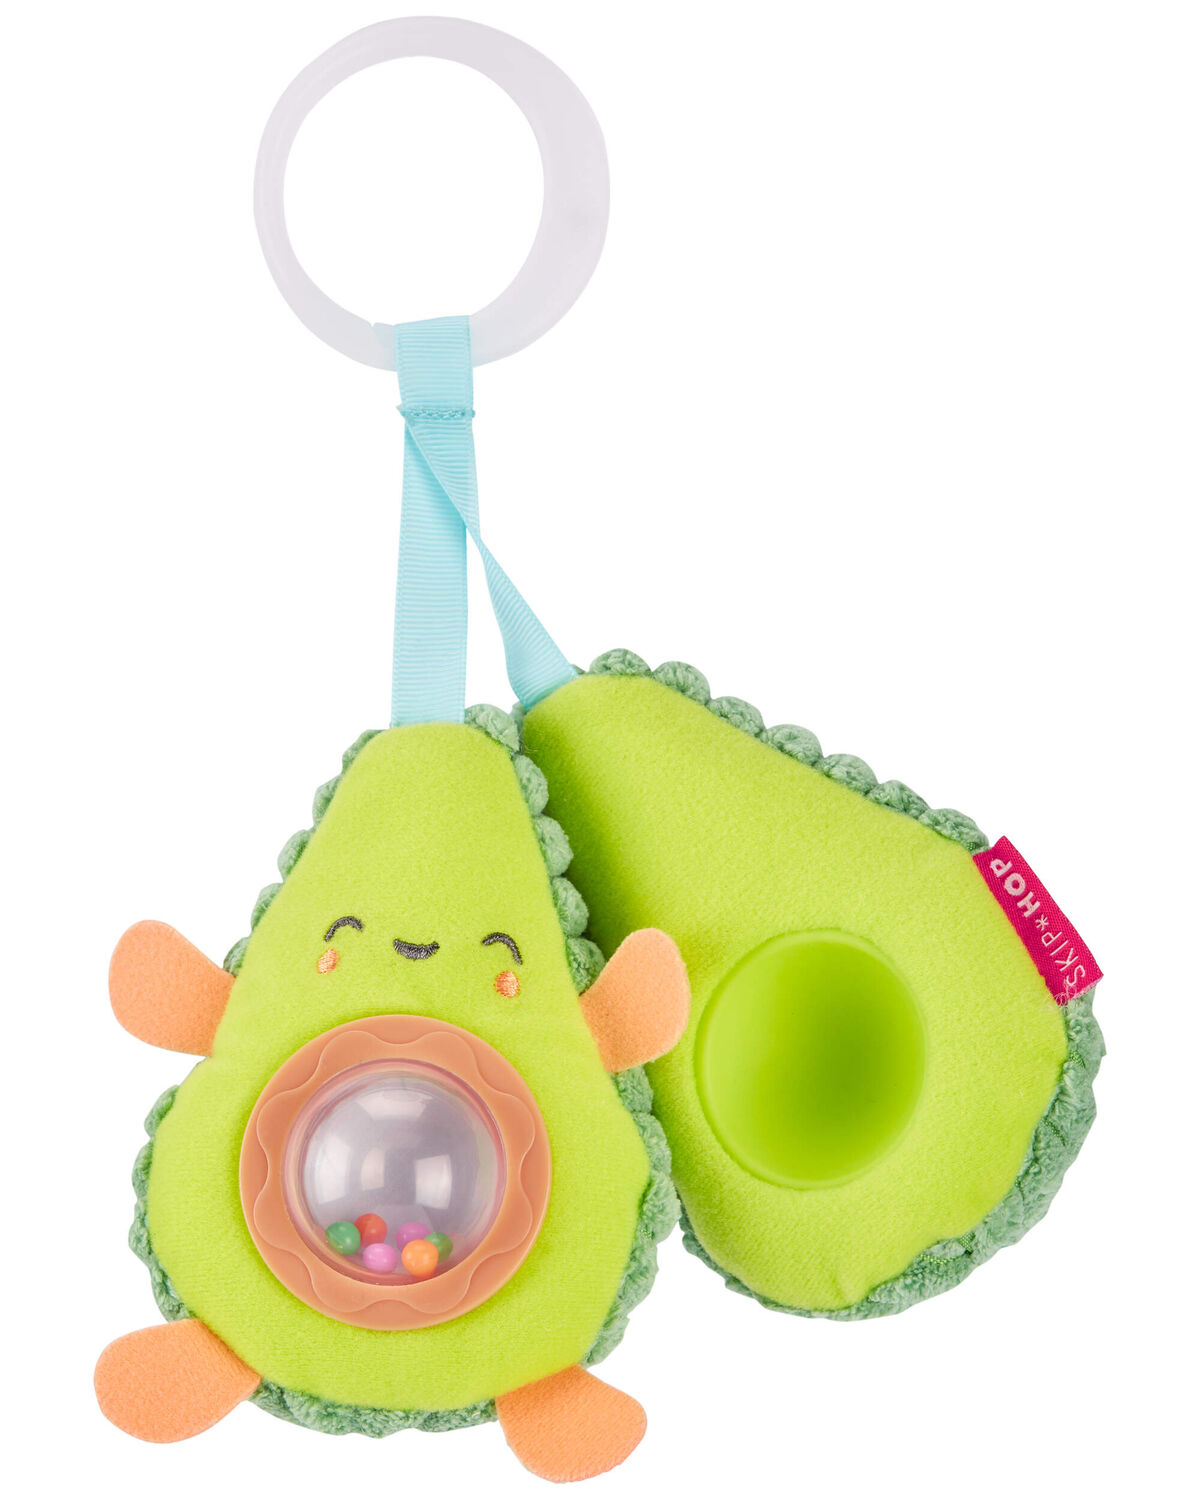 Farmstand Avocado Baby Stroller Toy